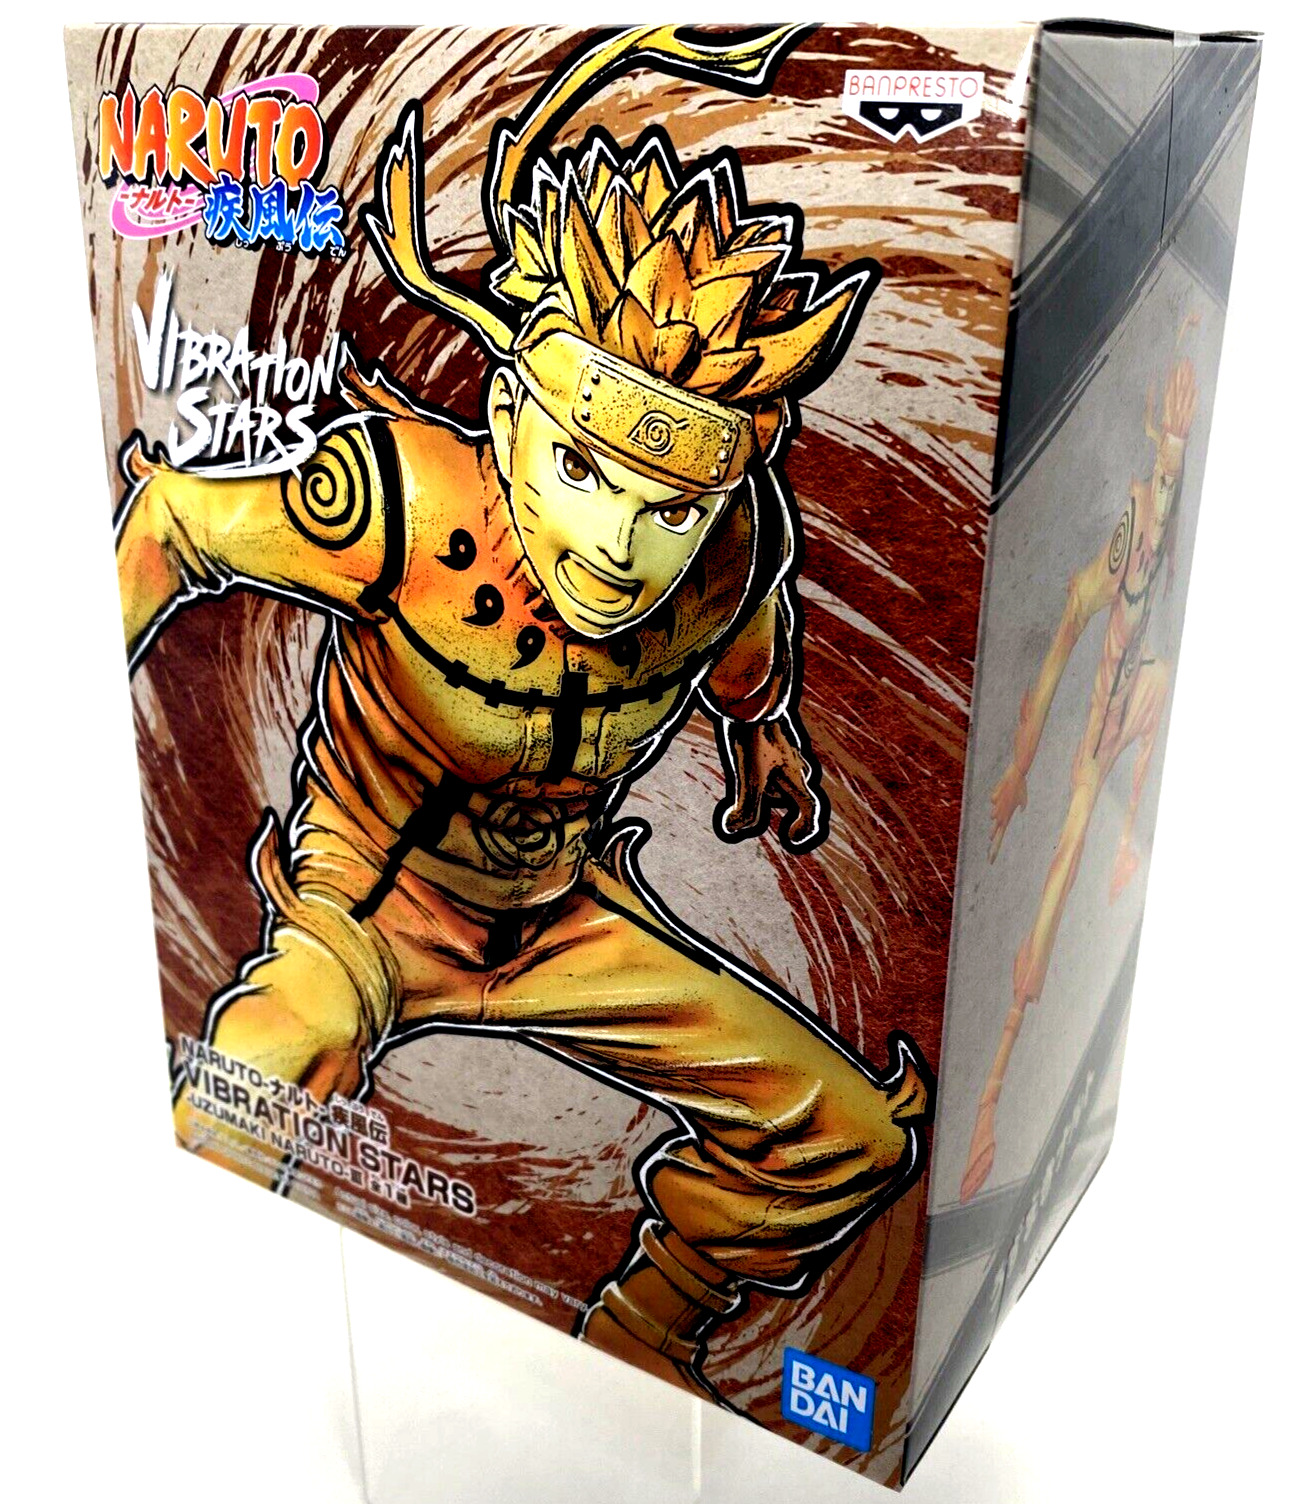 Naruto: Shippuden Naruto Uzumaki III Vibration Stars Statue